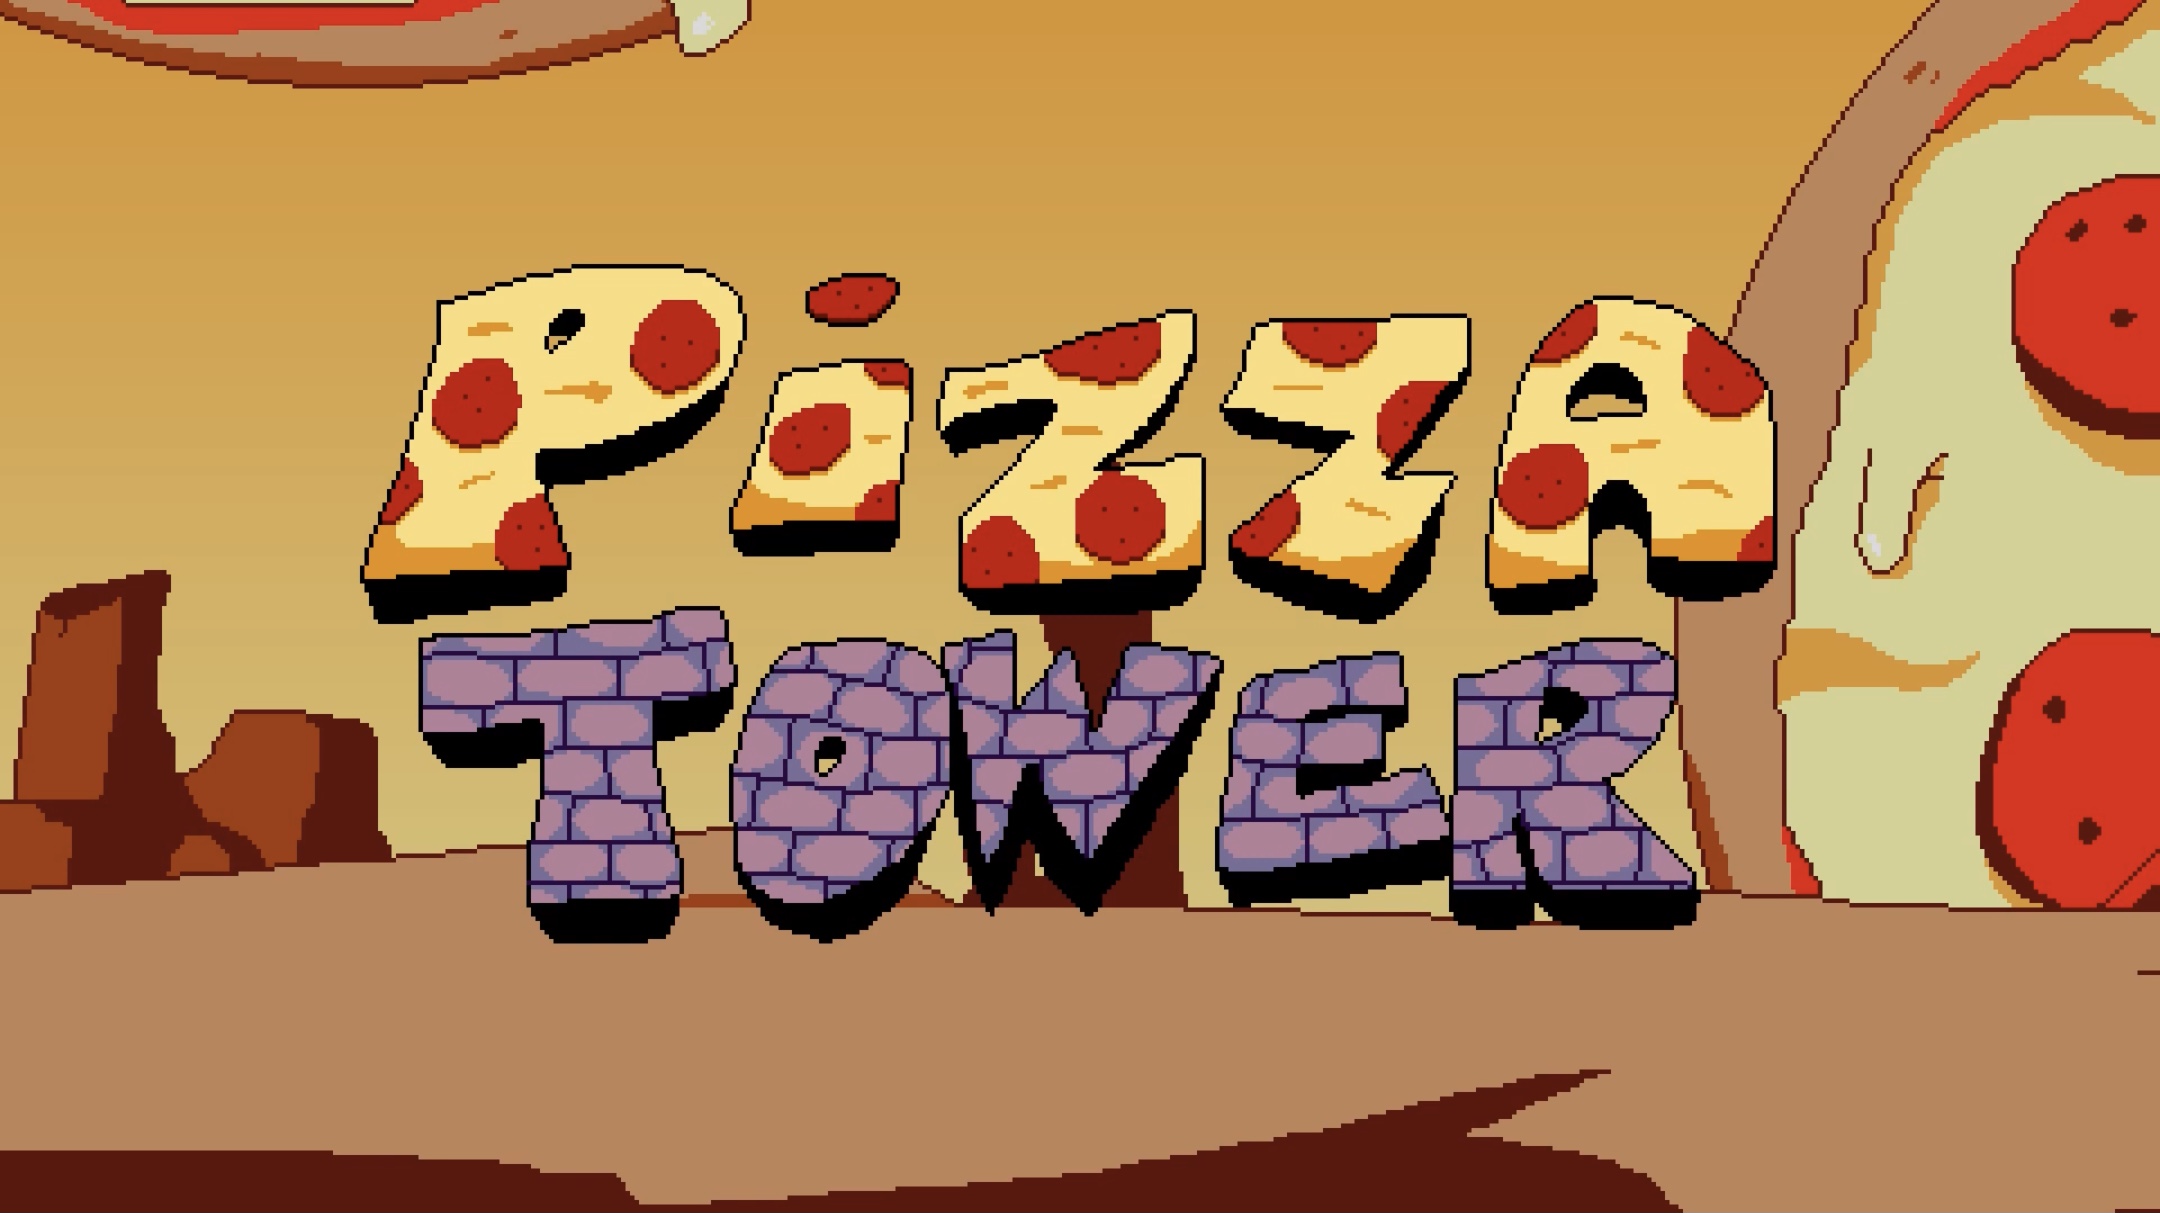 Пицца тавер песни. Пизза тавэр. Pizza Tower игра. Игрушки пицца ТАВЕР. Пицца башня.